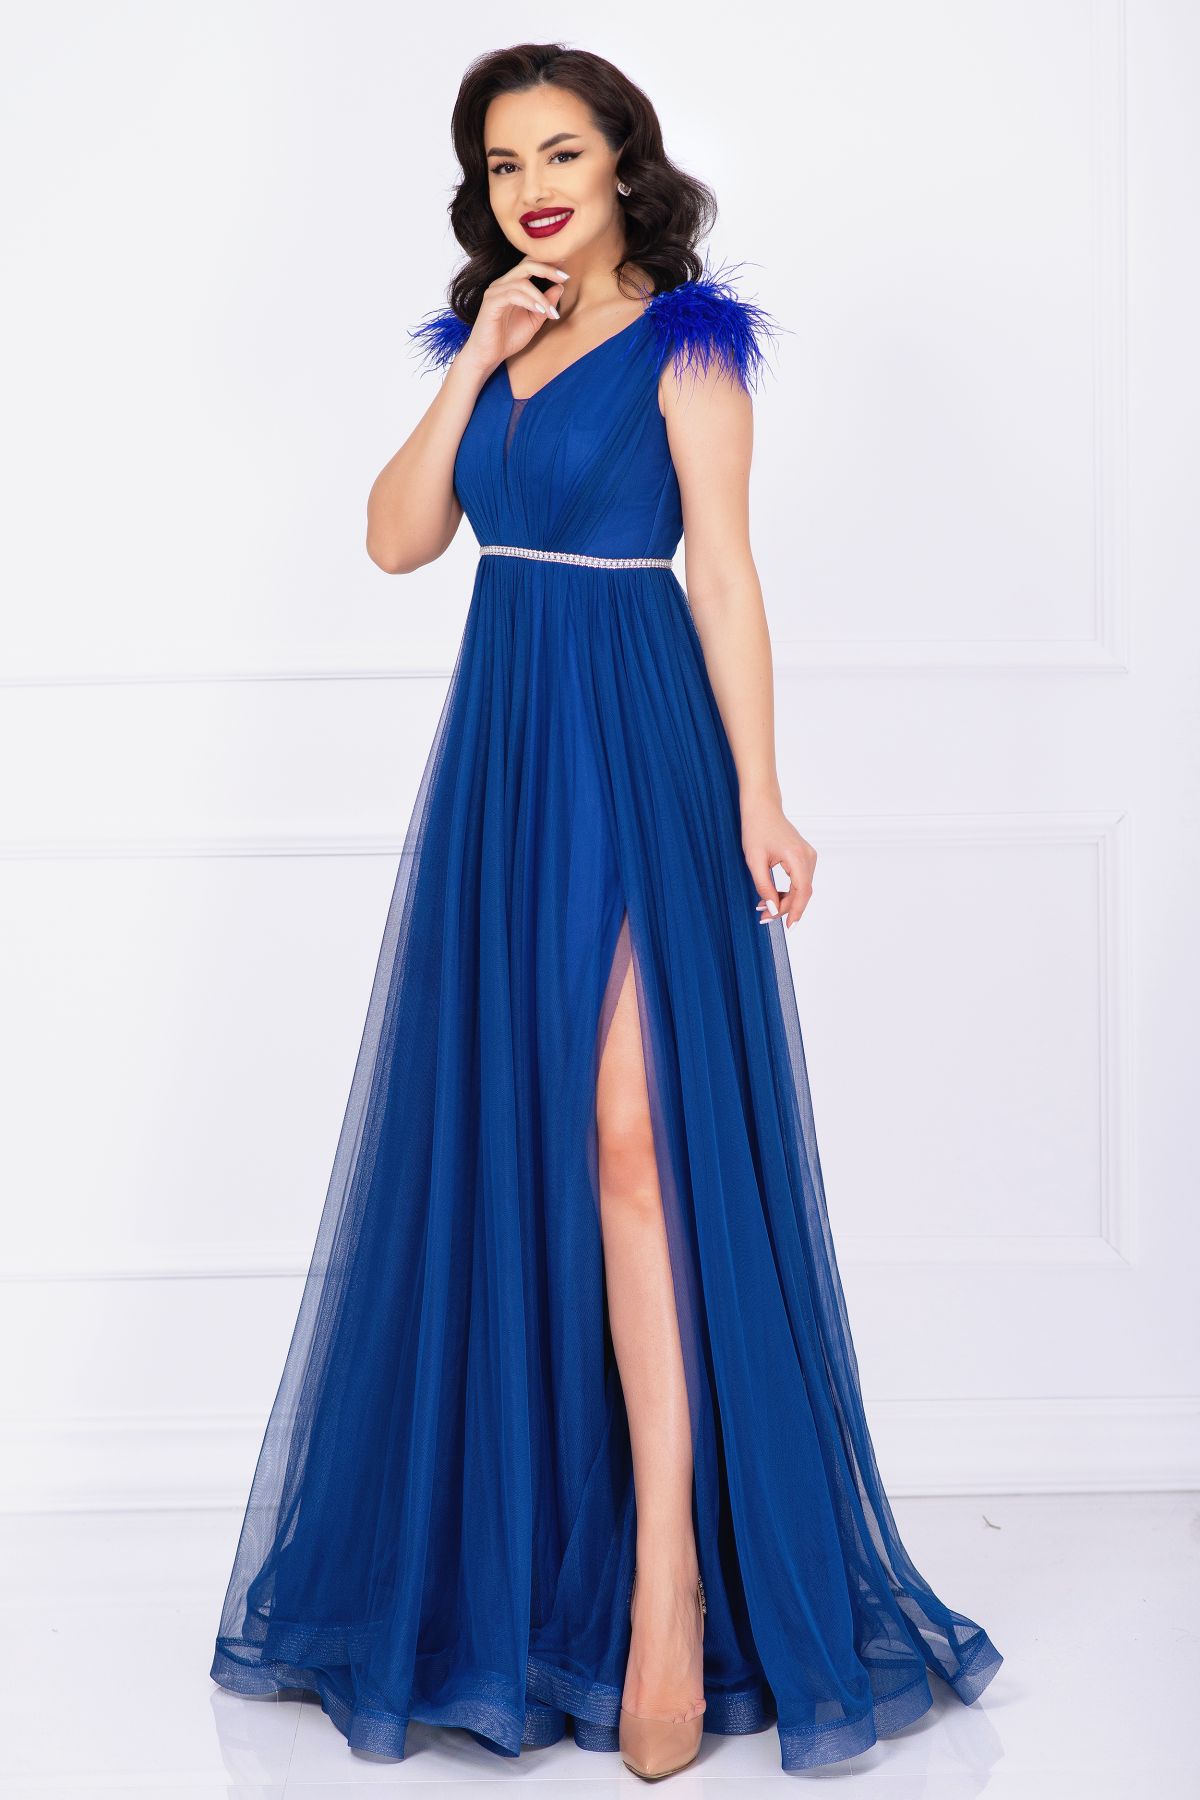 Rochie de seara Gratiela albastru royal cu perle in talie si accesoriu tip fulgi image13